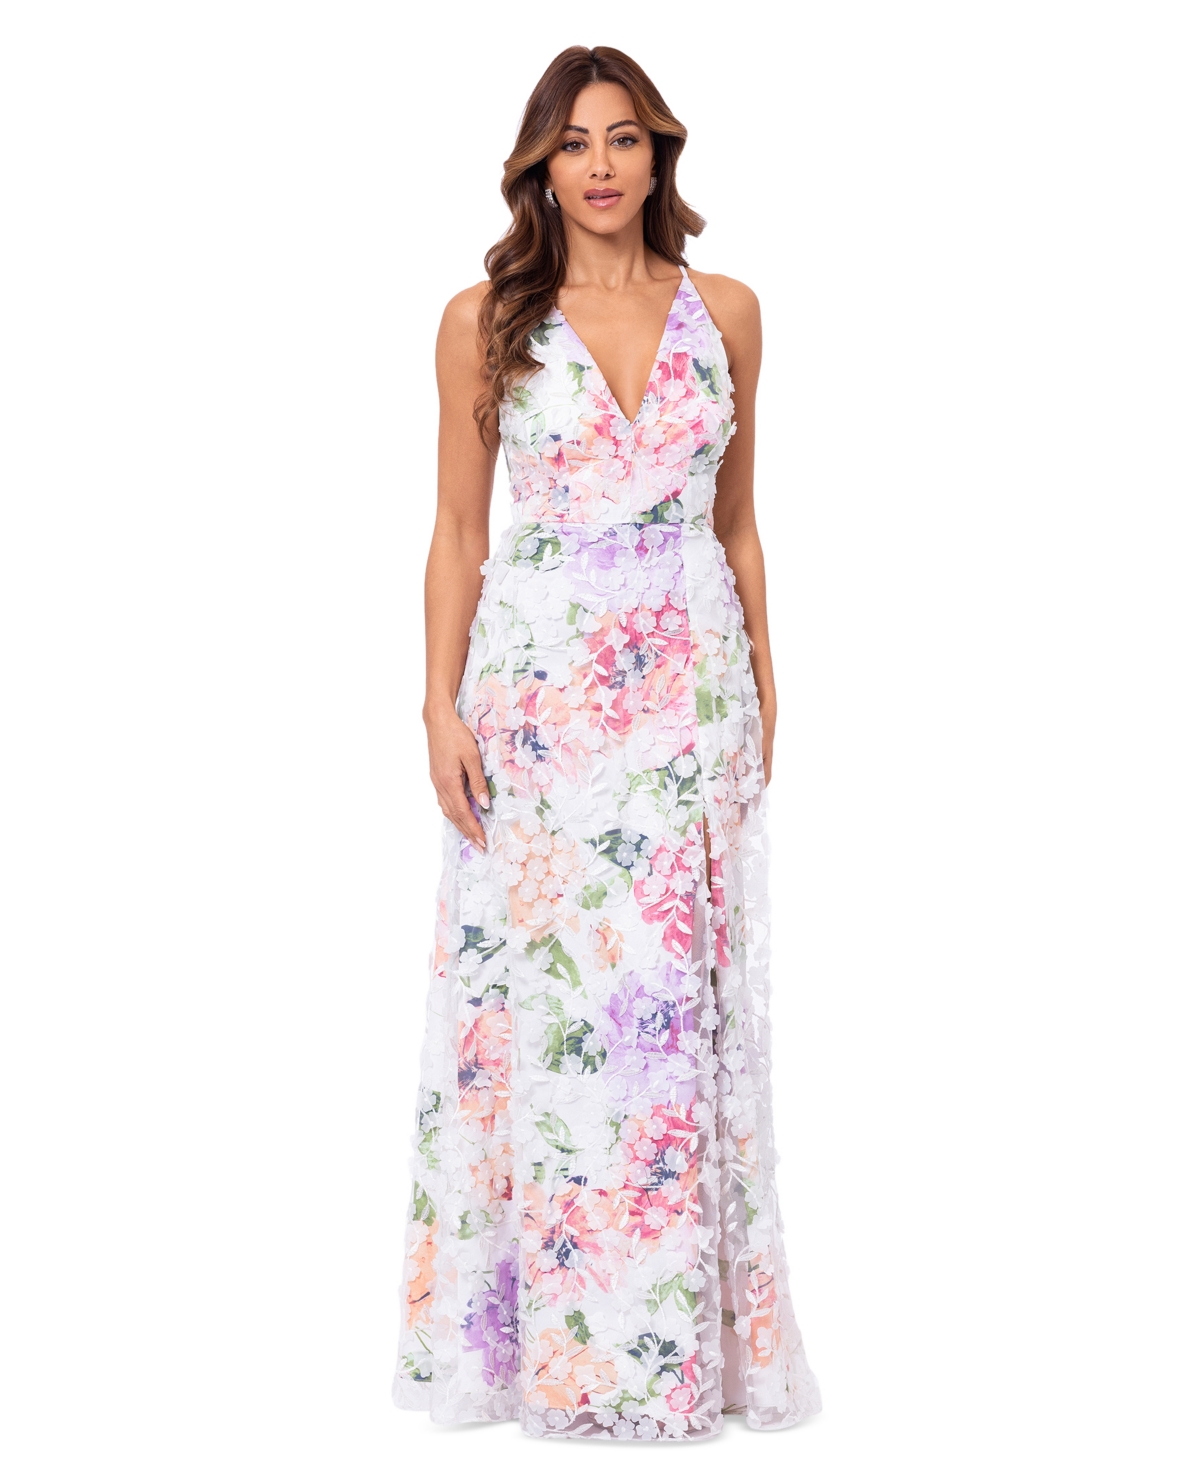 Women's 3D-Applique Floral-Print Gown - White/Pink/Green